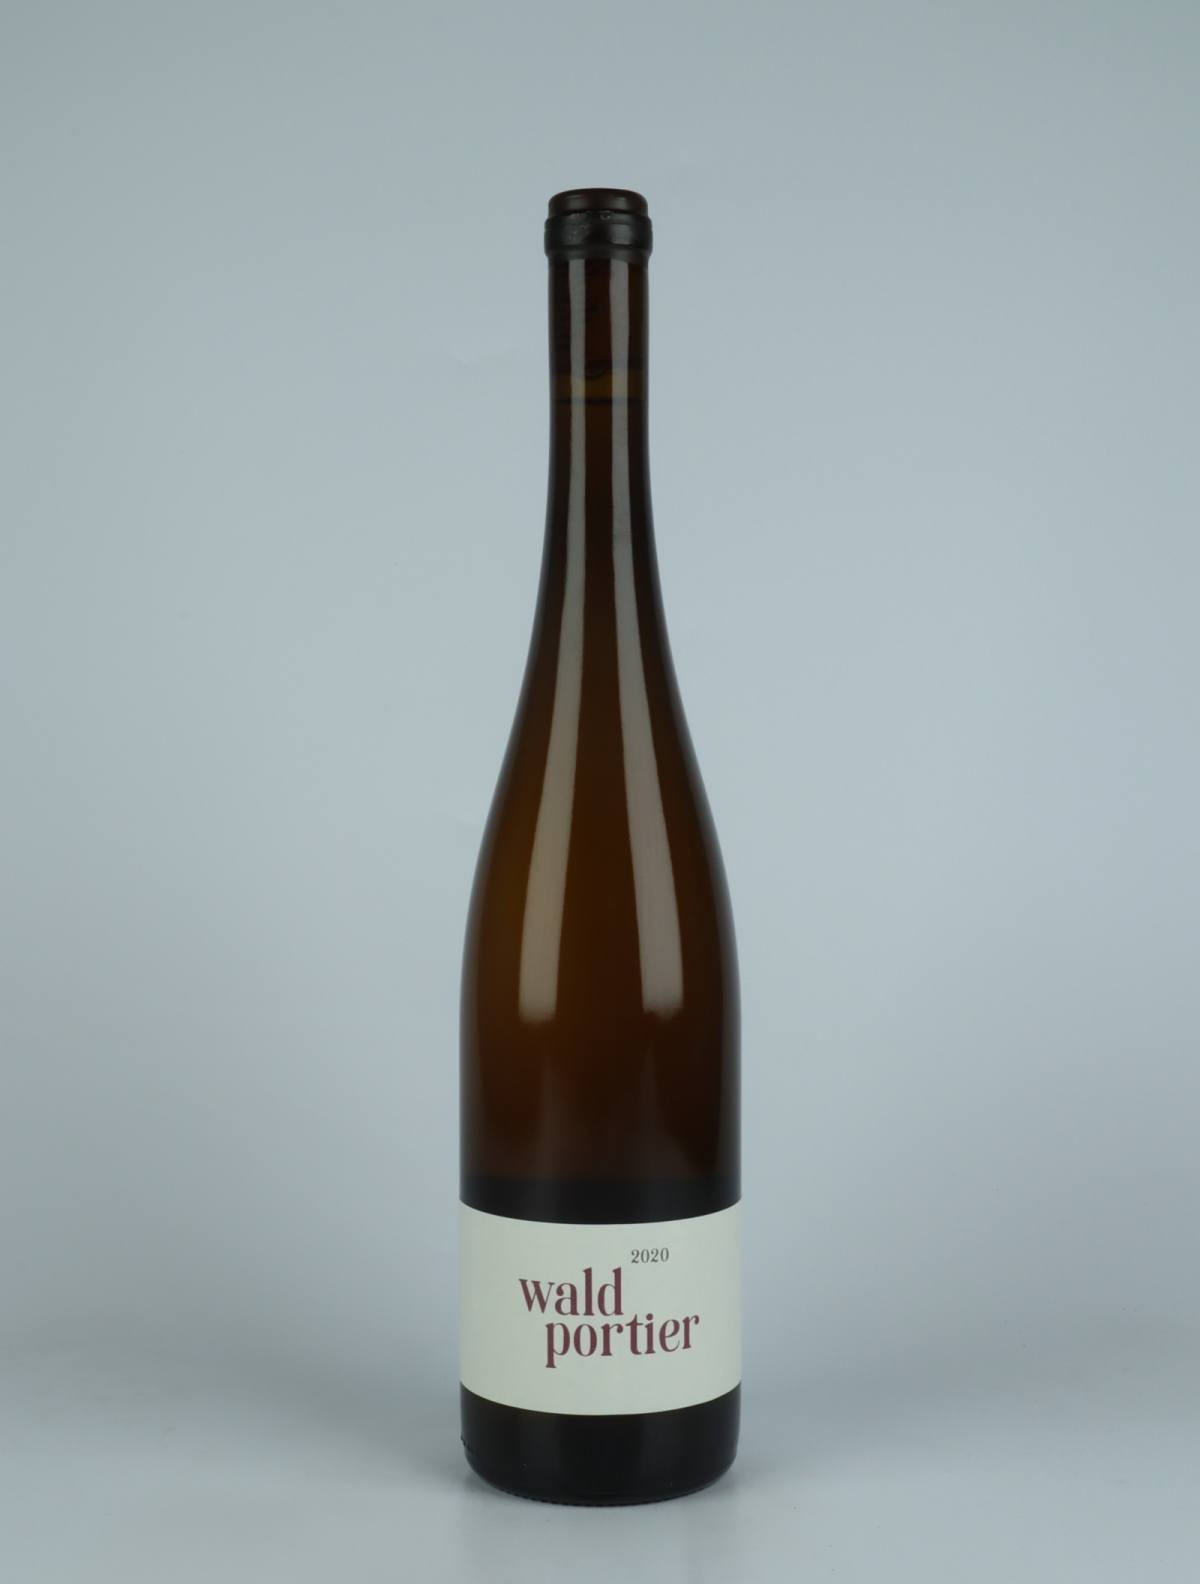 A bottle 2020 Waldportier White wine from Jakob Tennstedt, Mosel in Germany